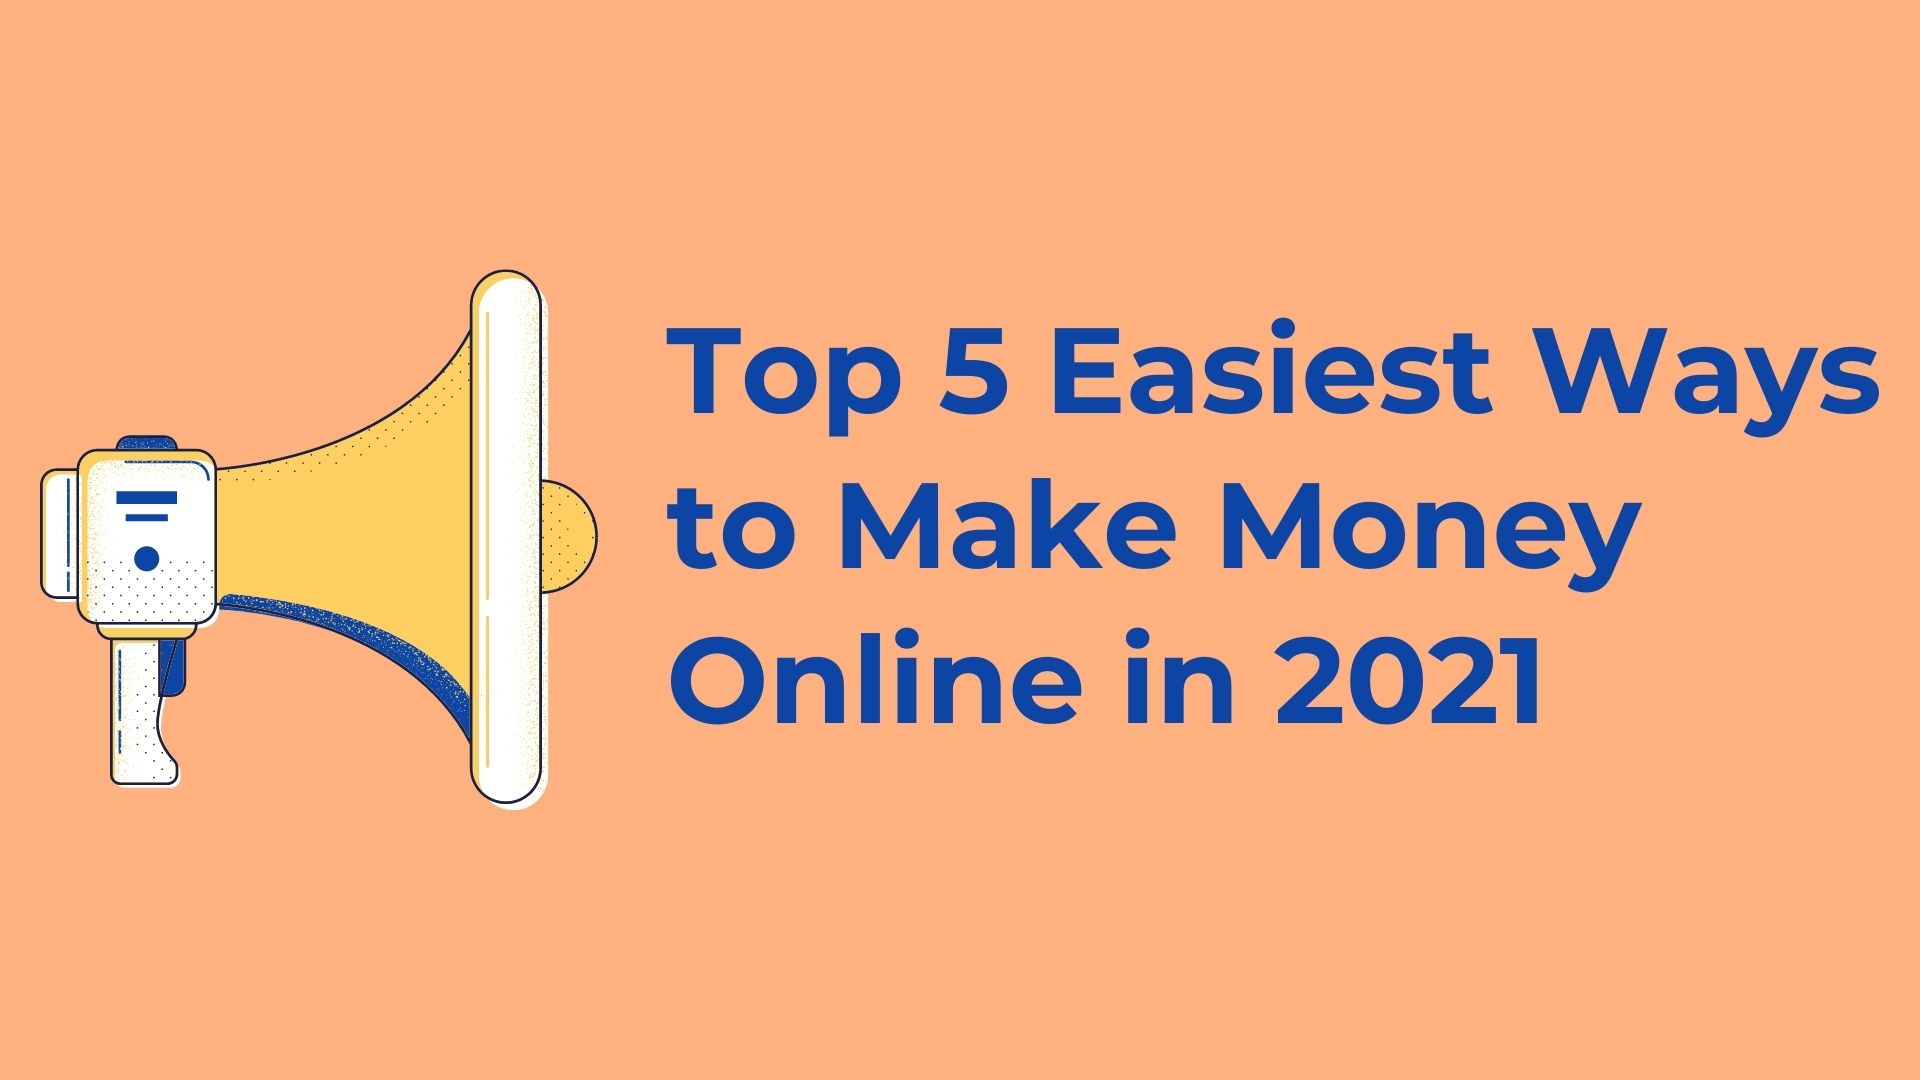 Top 5 Easiest Ways to Make Money Online in 2021